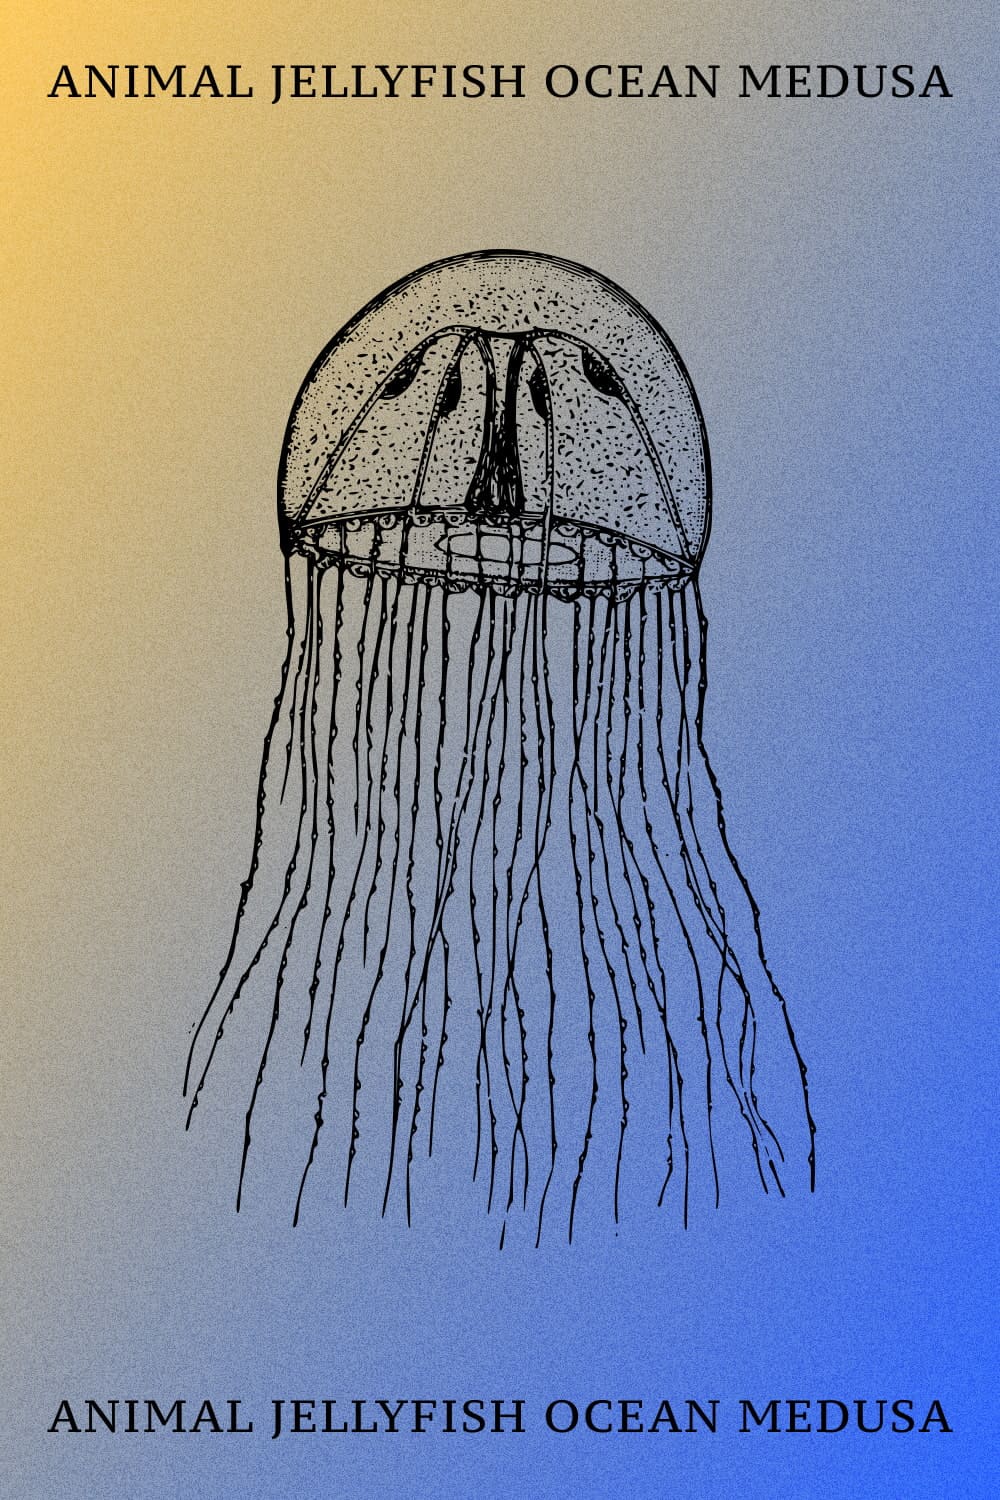 Animal Jellyfish Ocean Medusa - Pinterest Image.